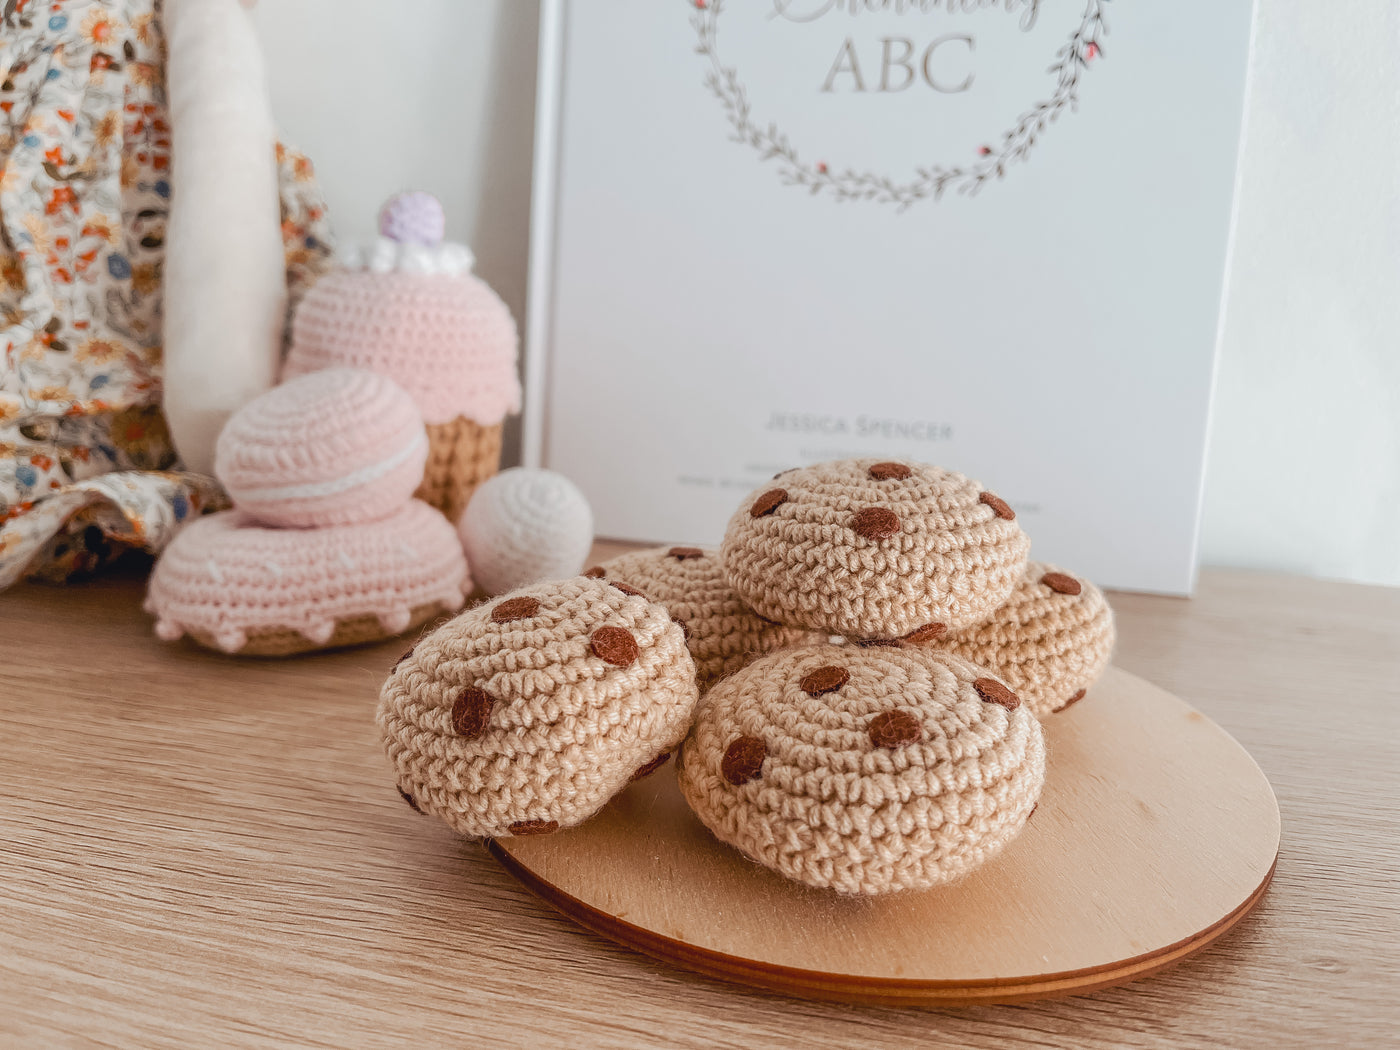 Crochet choc chip cookies | Handmade, 5 piece set